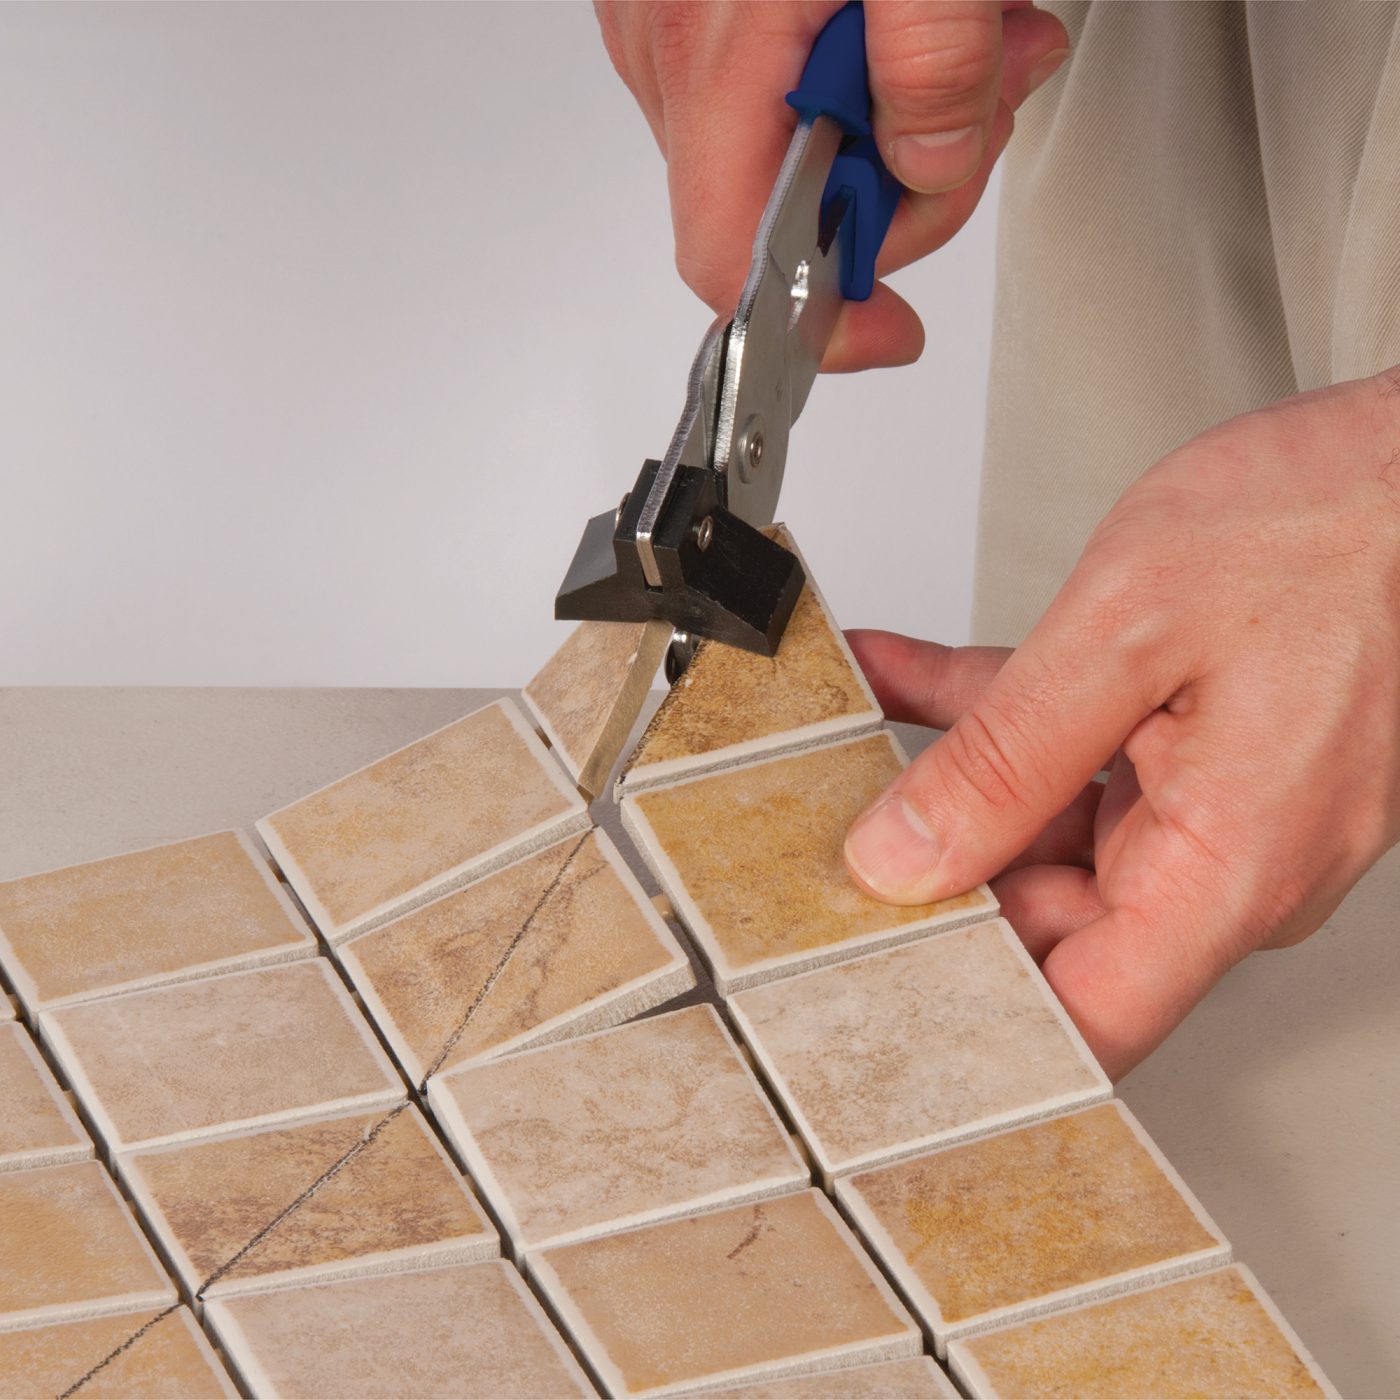 Holtmann German Hand held  wheel tile cutter for ceramic tiles handy tiling tool 